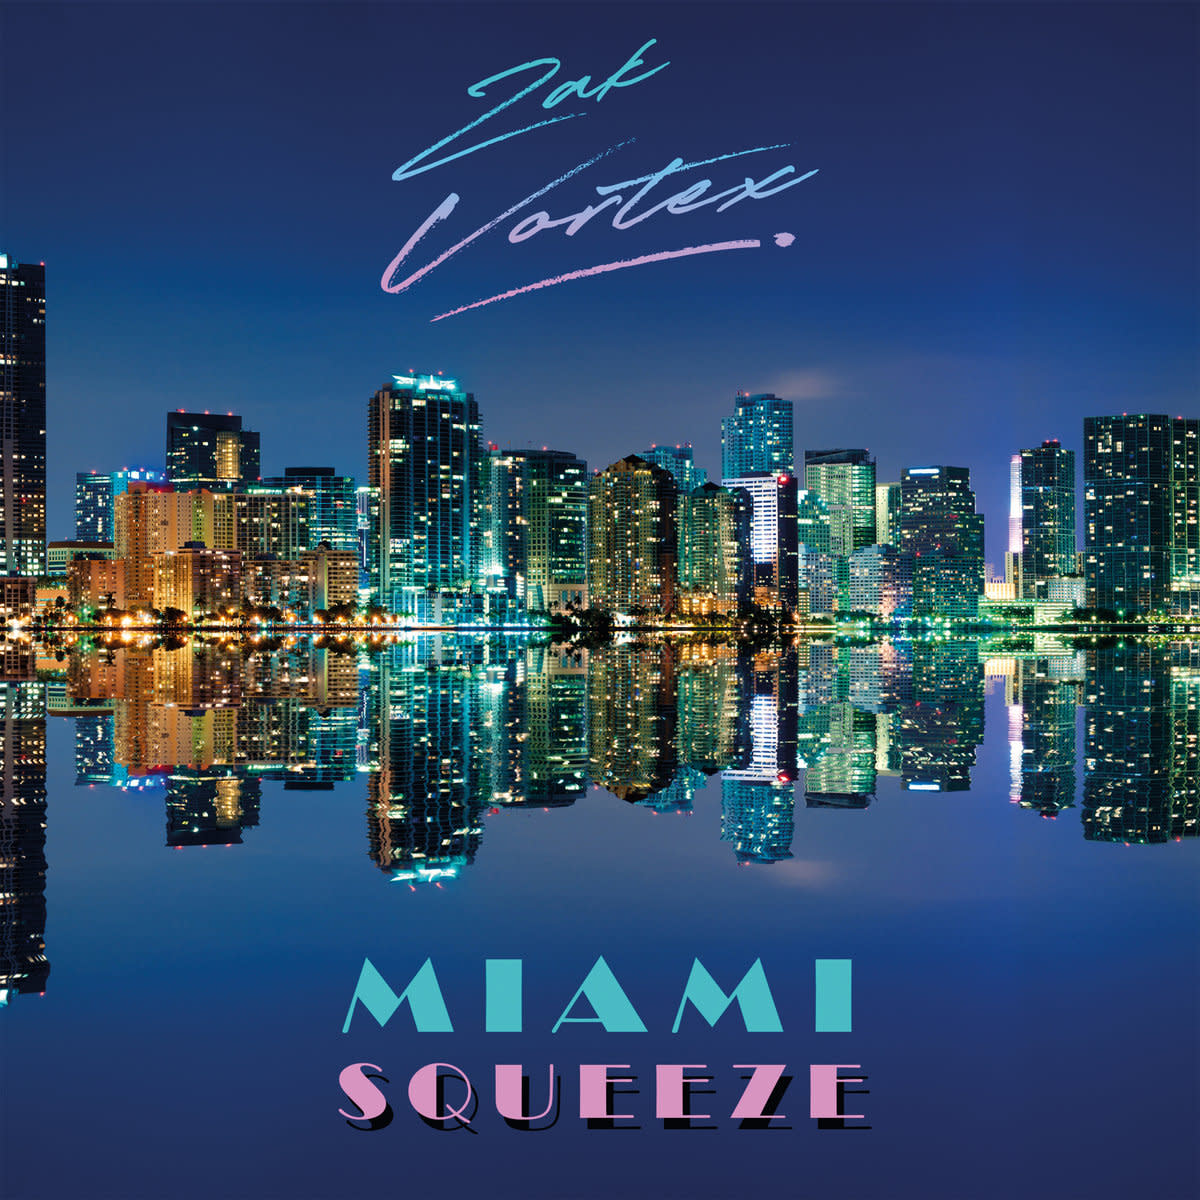 synth-album-review-miami-squeeze-by-zak-vortex